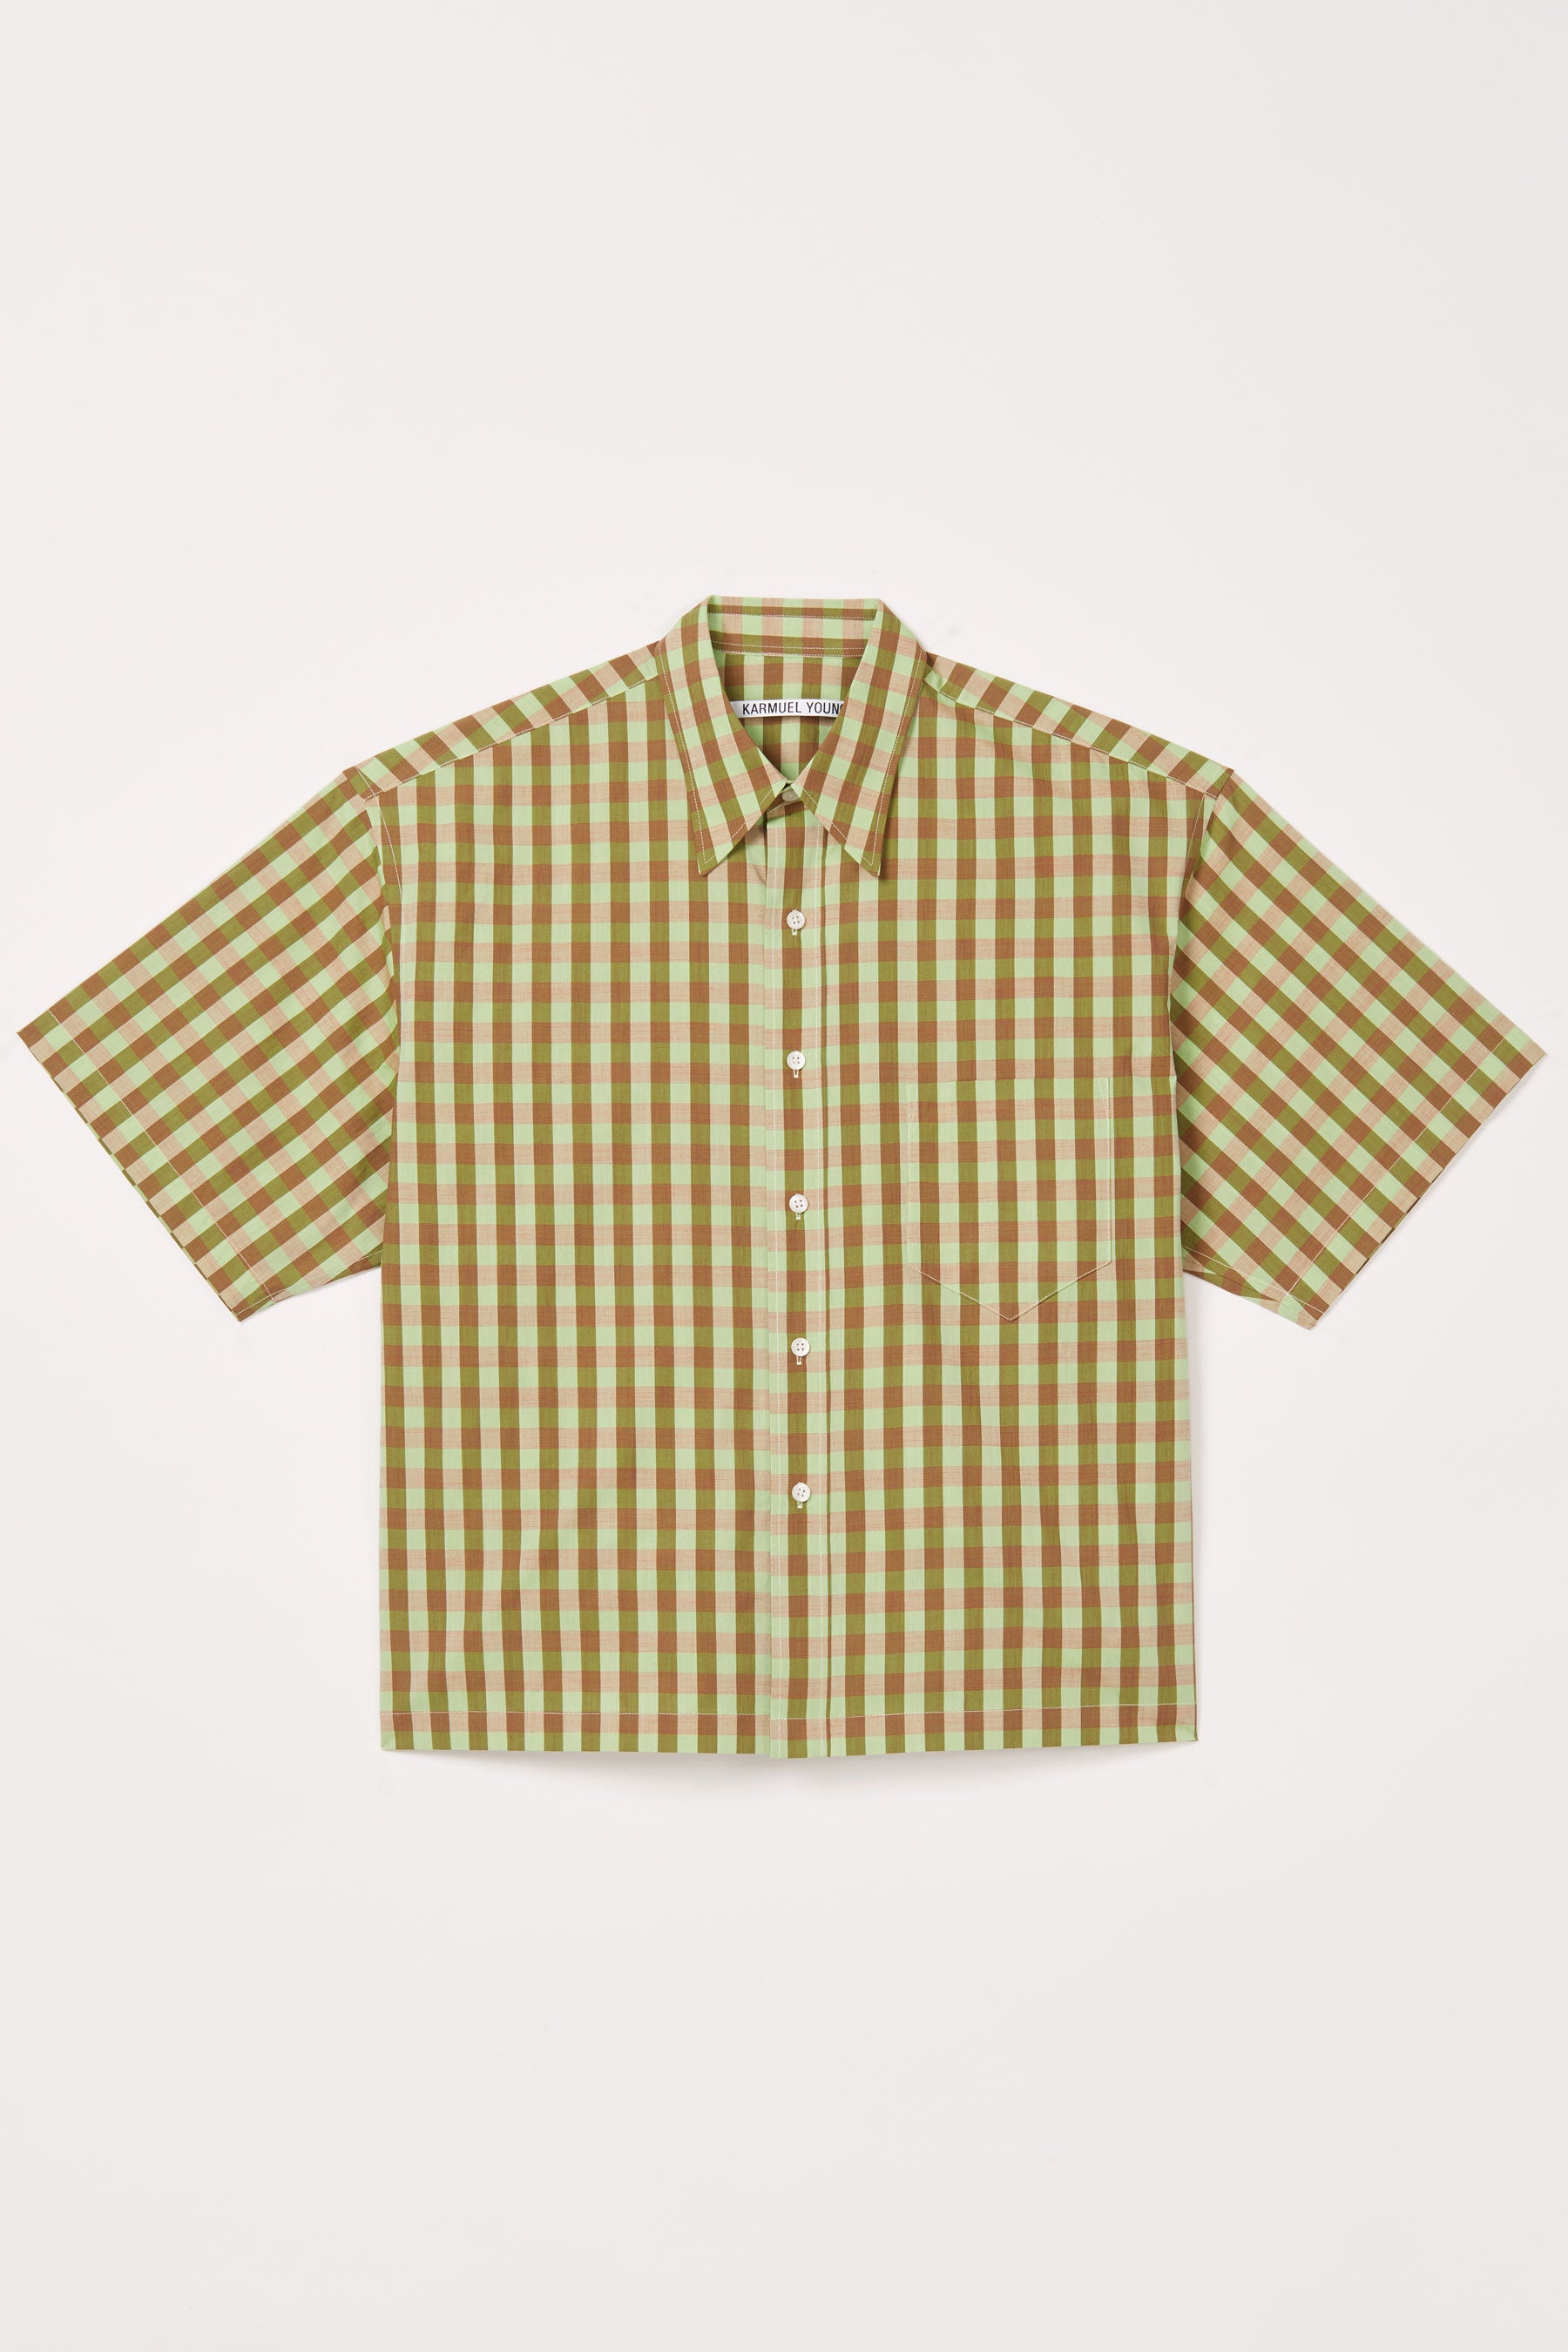 Green Cotton Gingham Check Square Shirt